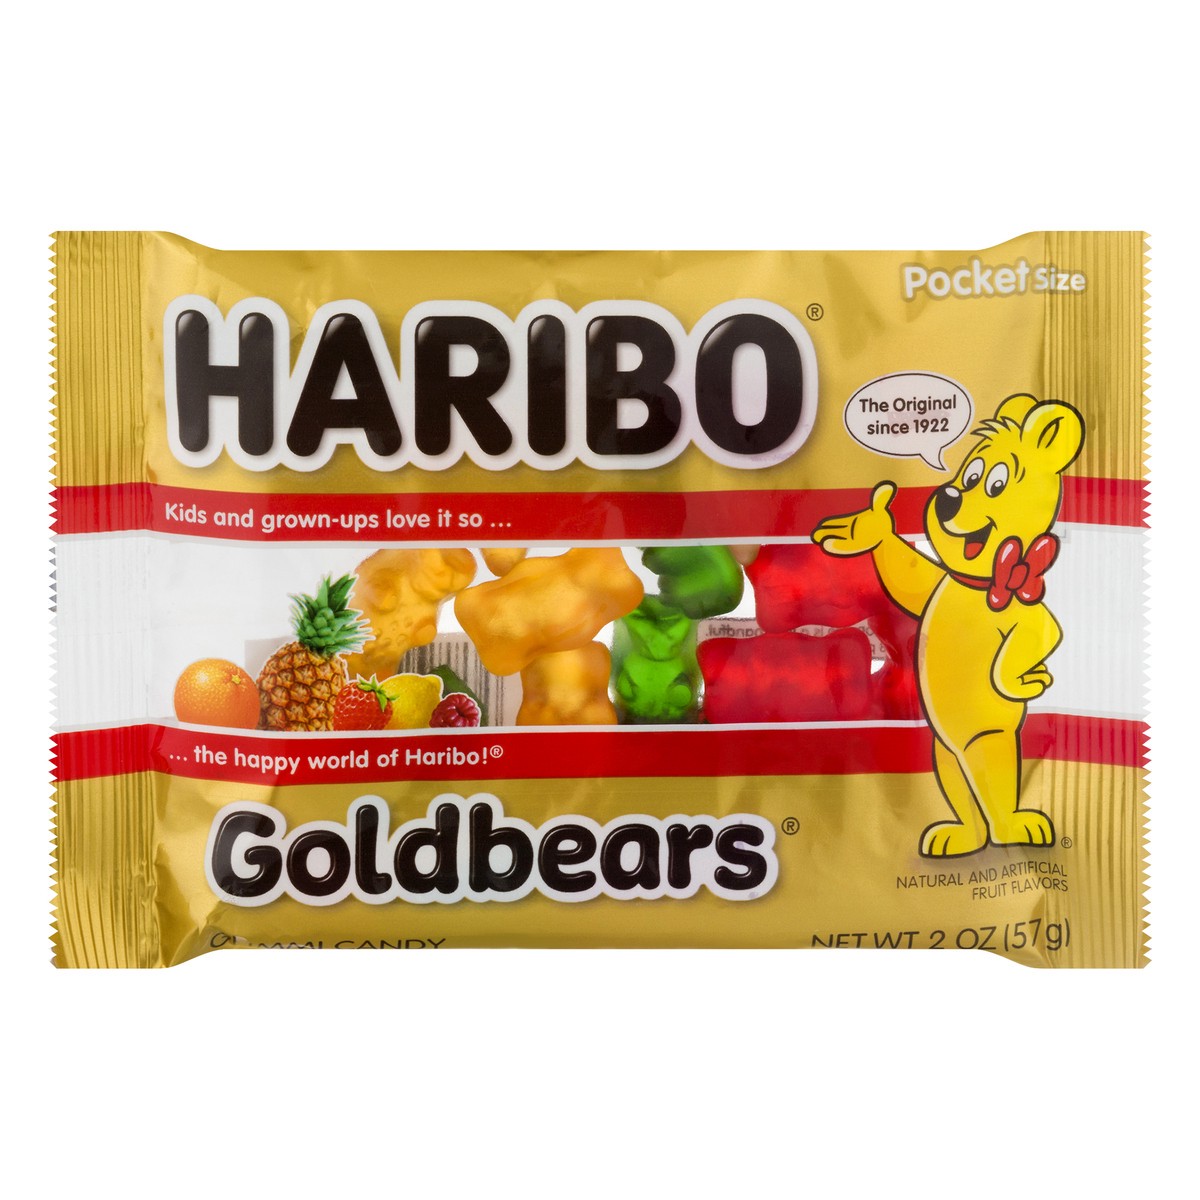 slide 1 of 13, Haribo Goldbears Pocket Size Gummi Candy 2 oz, 2 oz